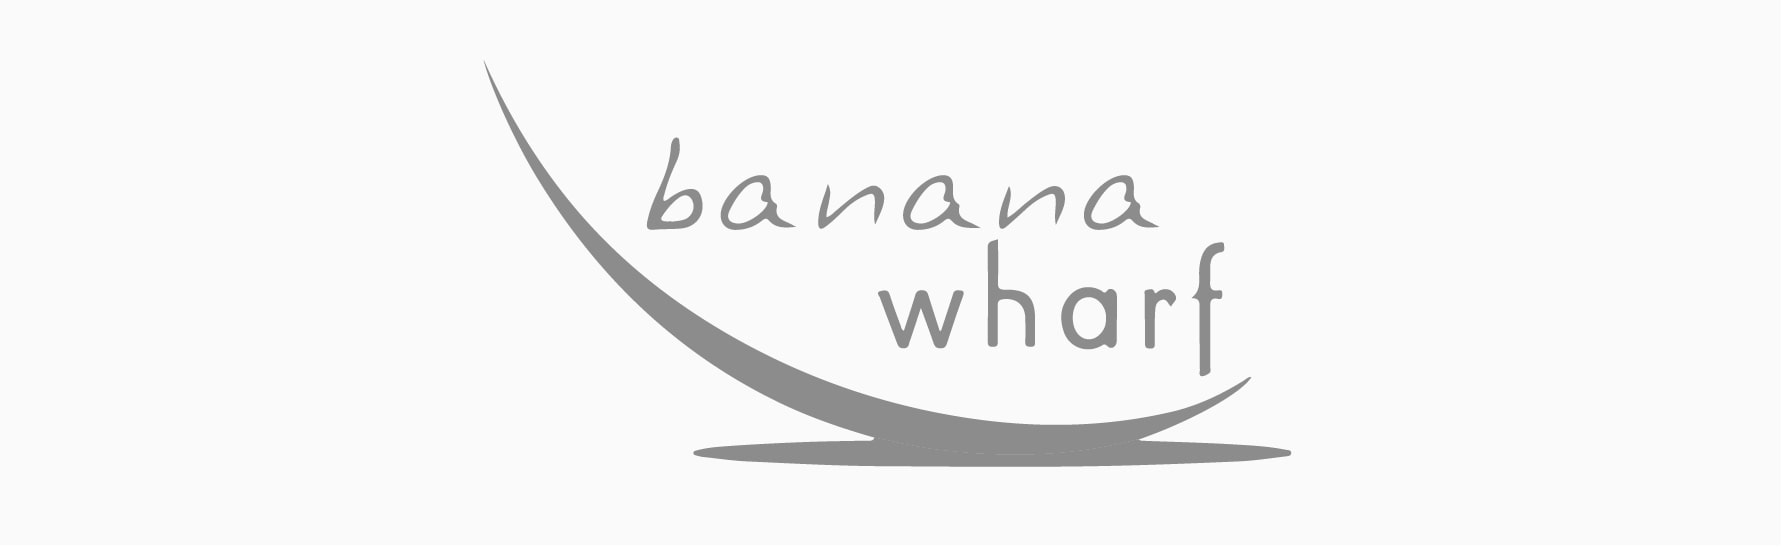 Bananahwharf-01-min